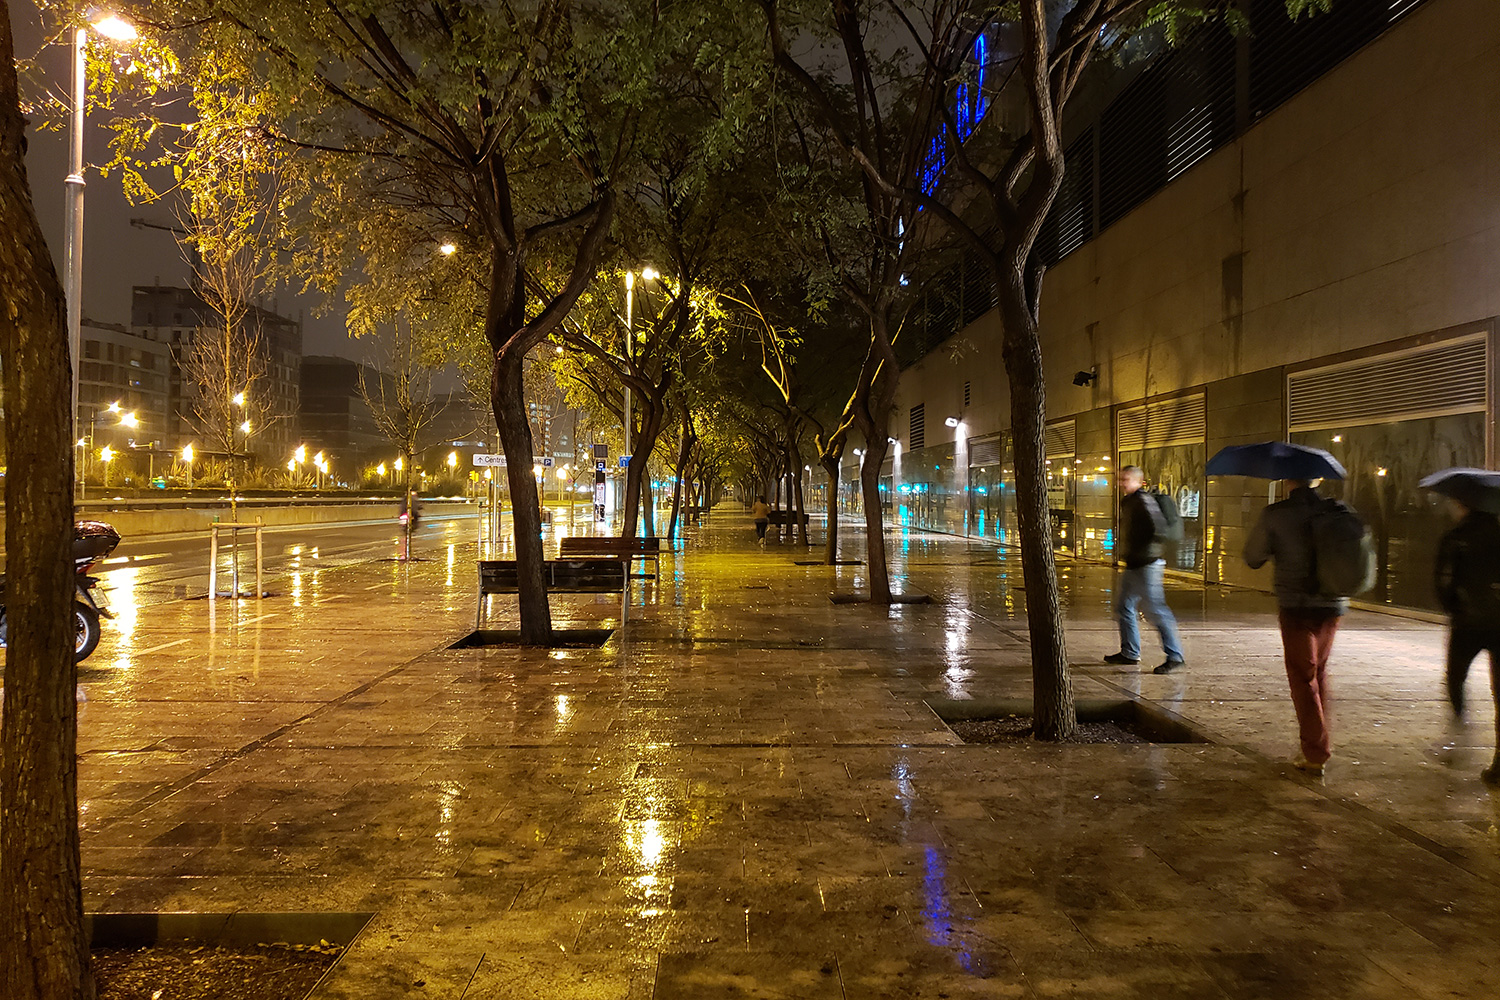 A rainy night in a city.